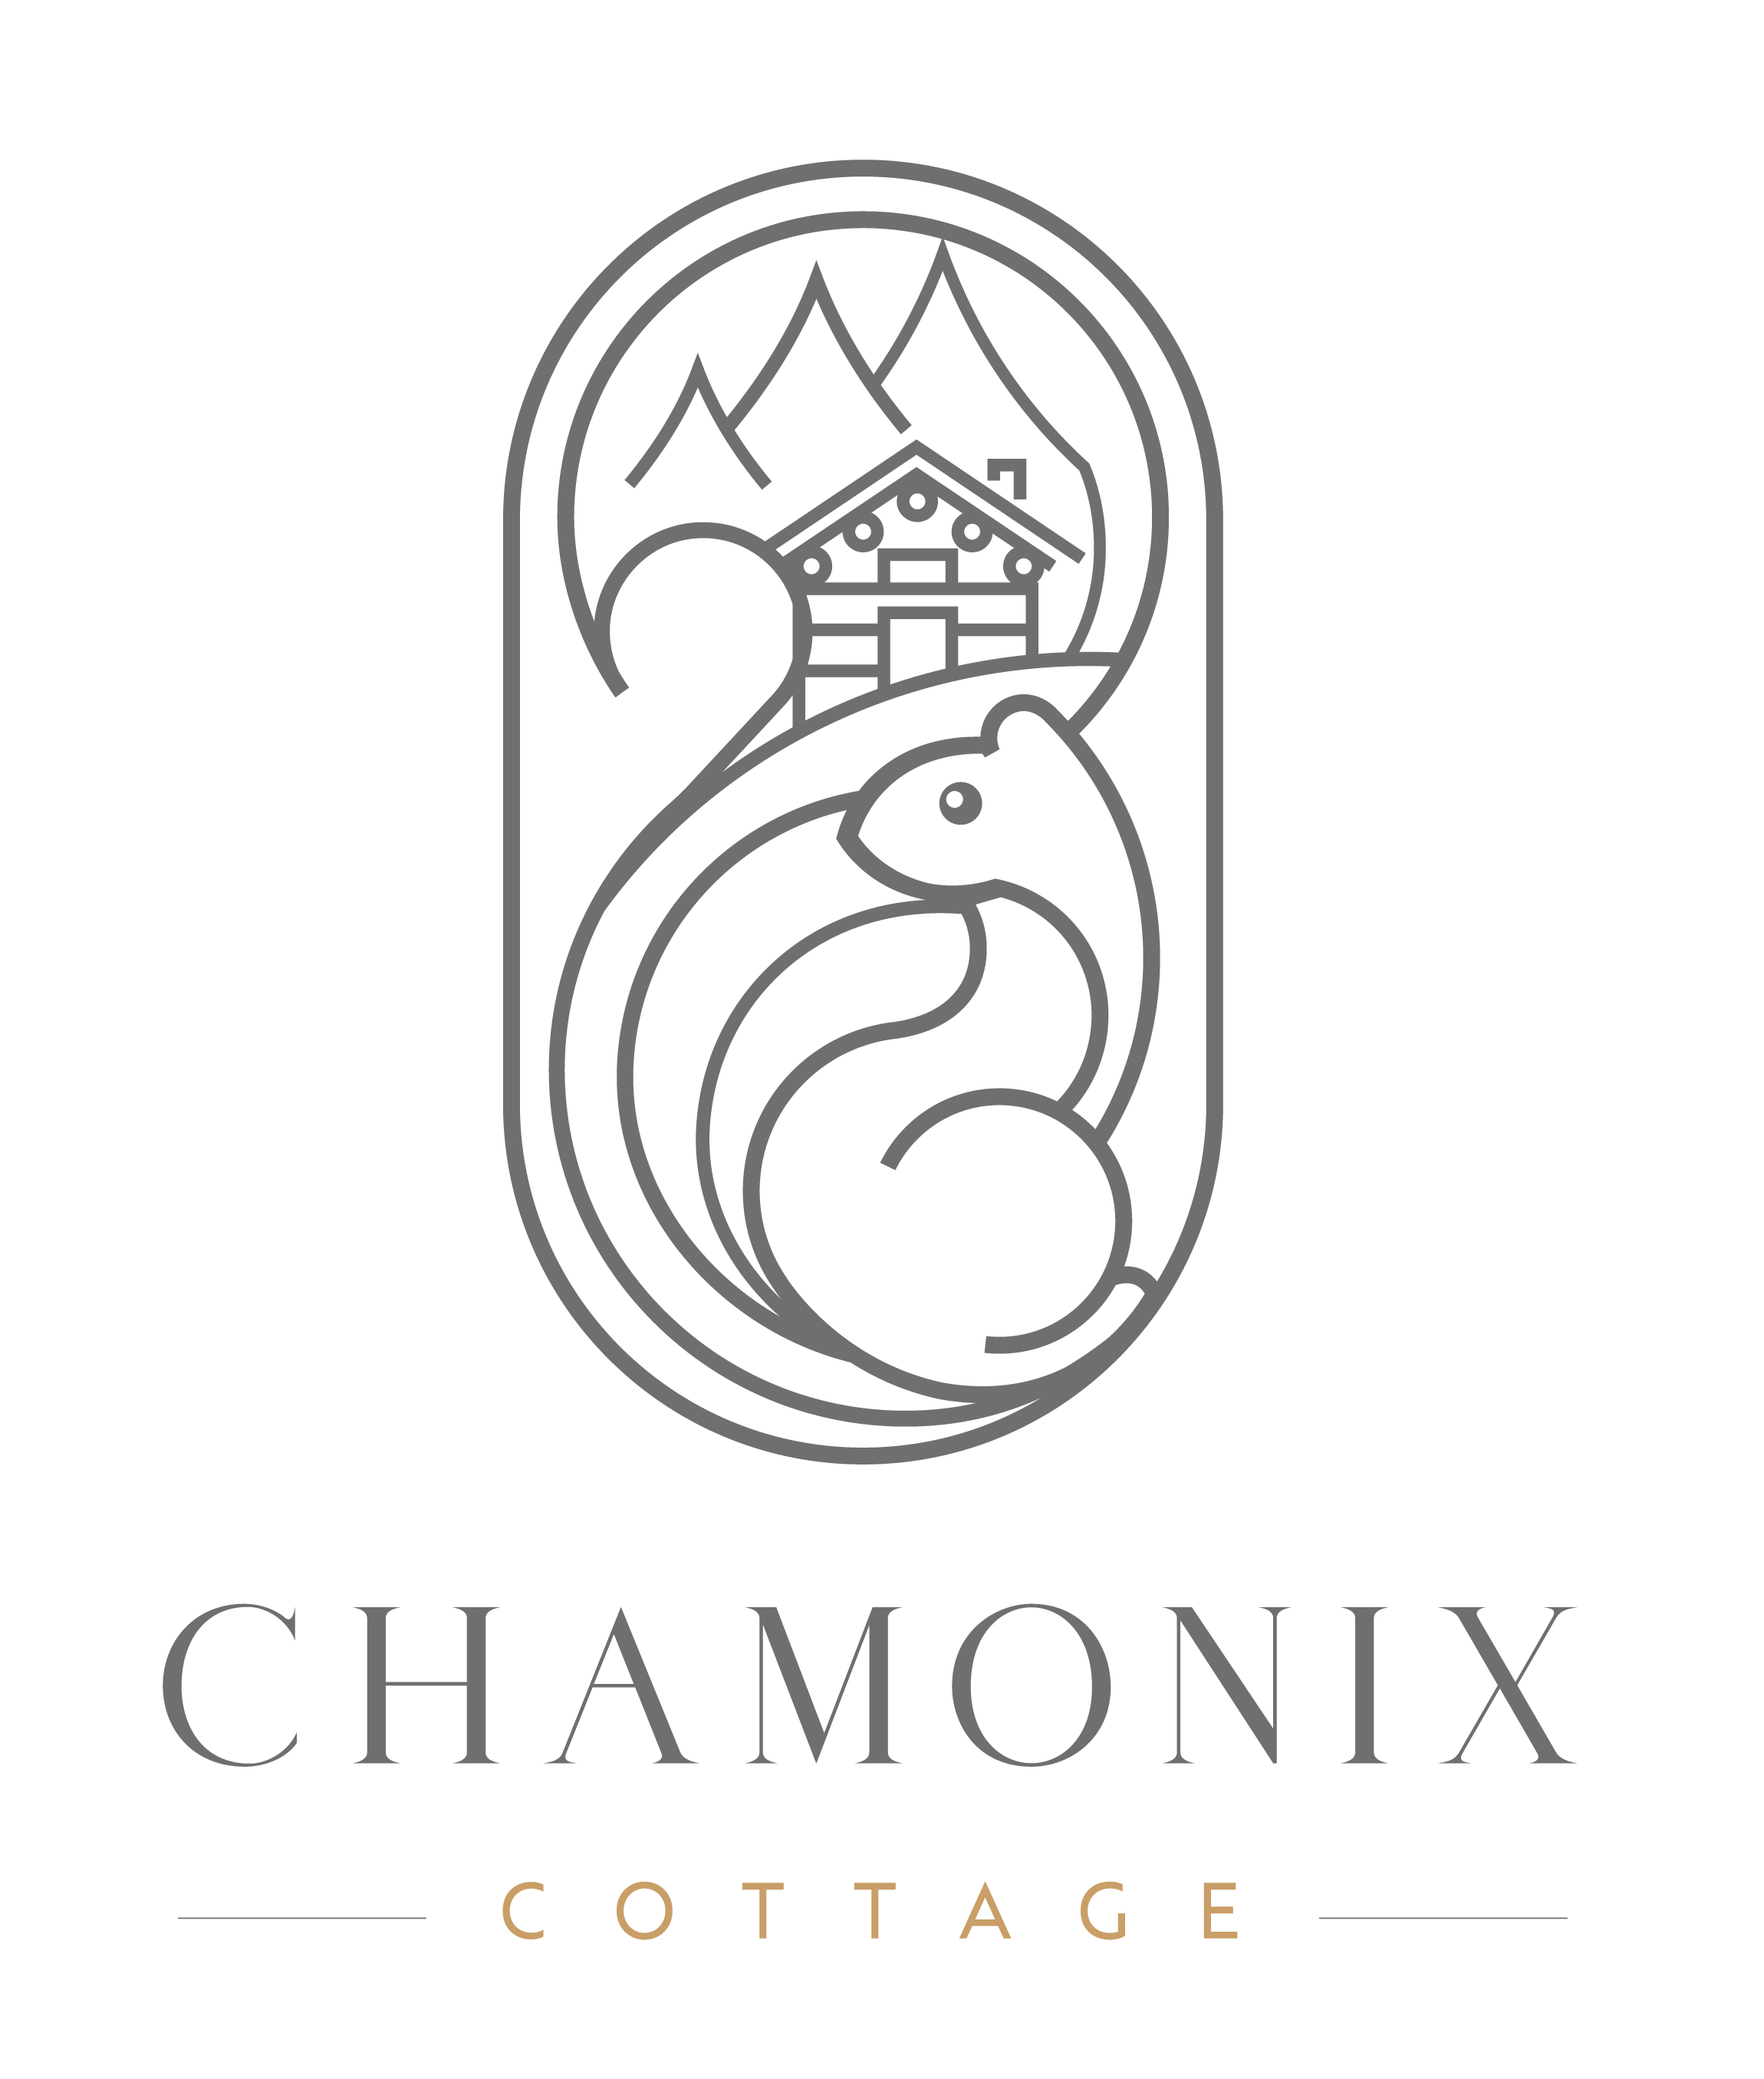 Chamonix Cottage | Terms & conditions of sales - Chamonix Cottage